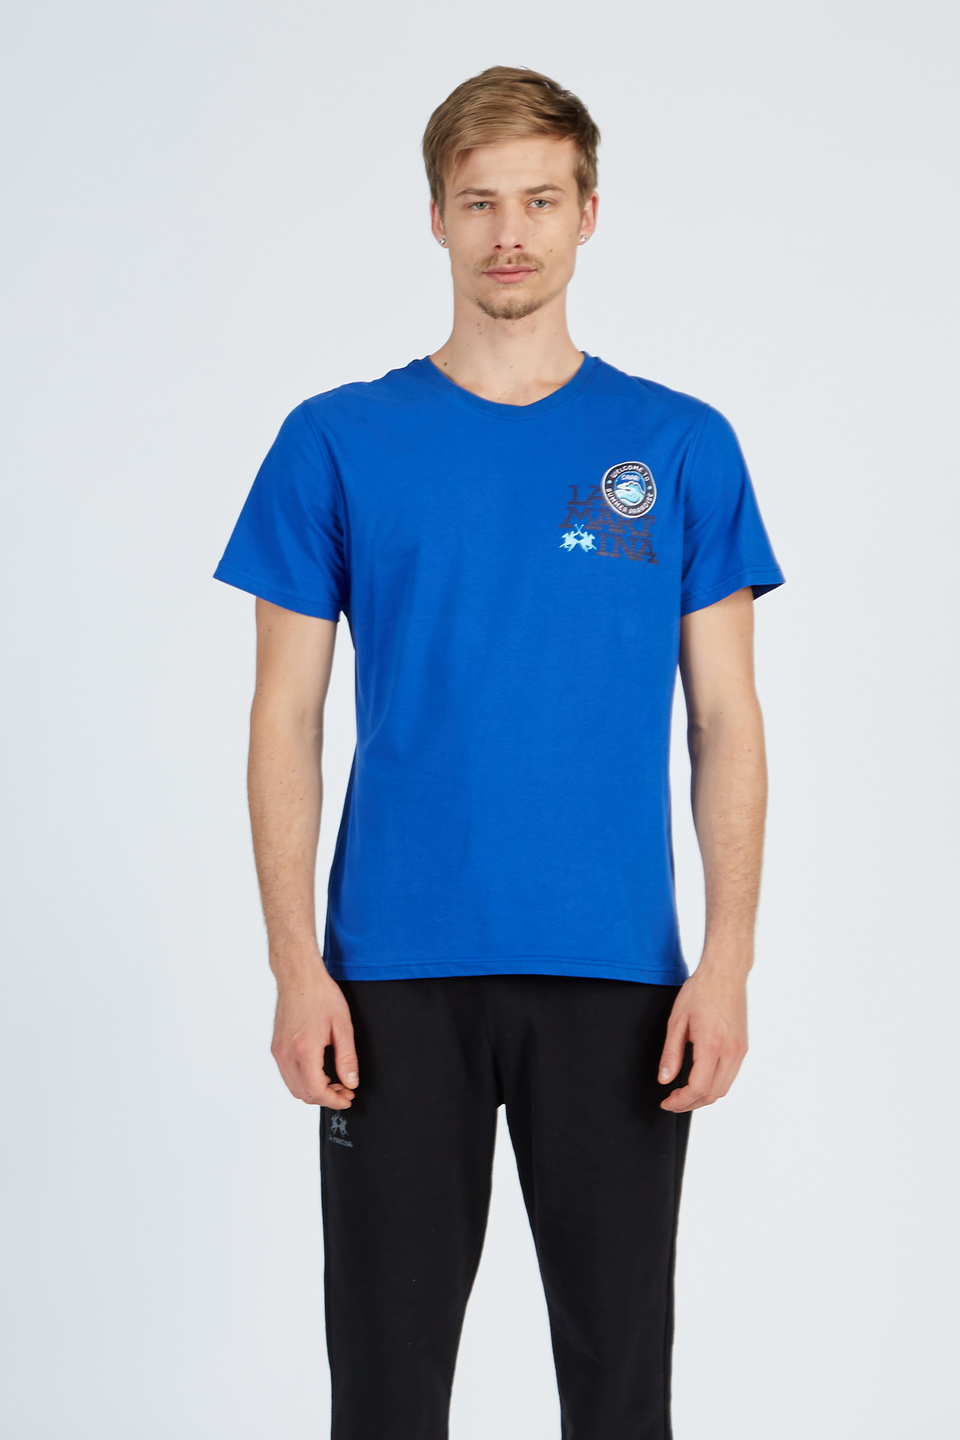 Men's cotton T-shirt with a print on the back - La Martina - Official Online Shop